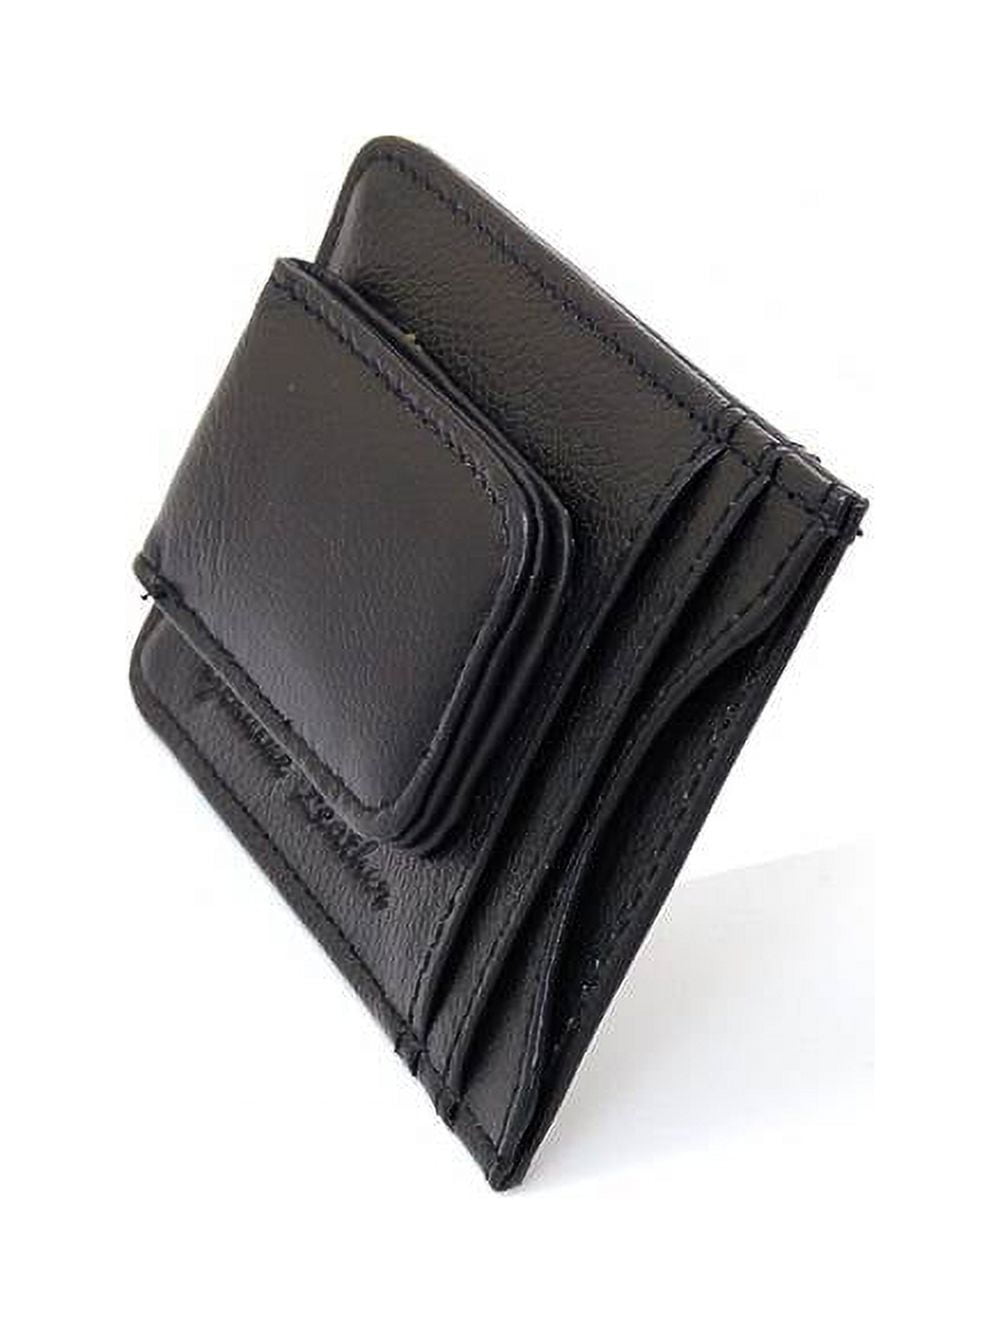 McClard's Gifts: leather slim front pocket wallet/money clip